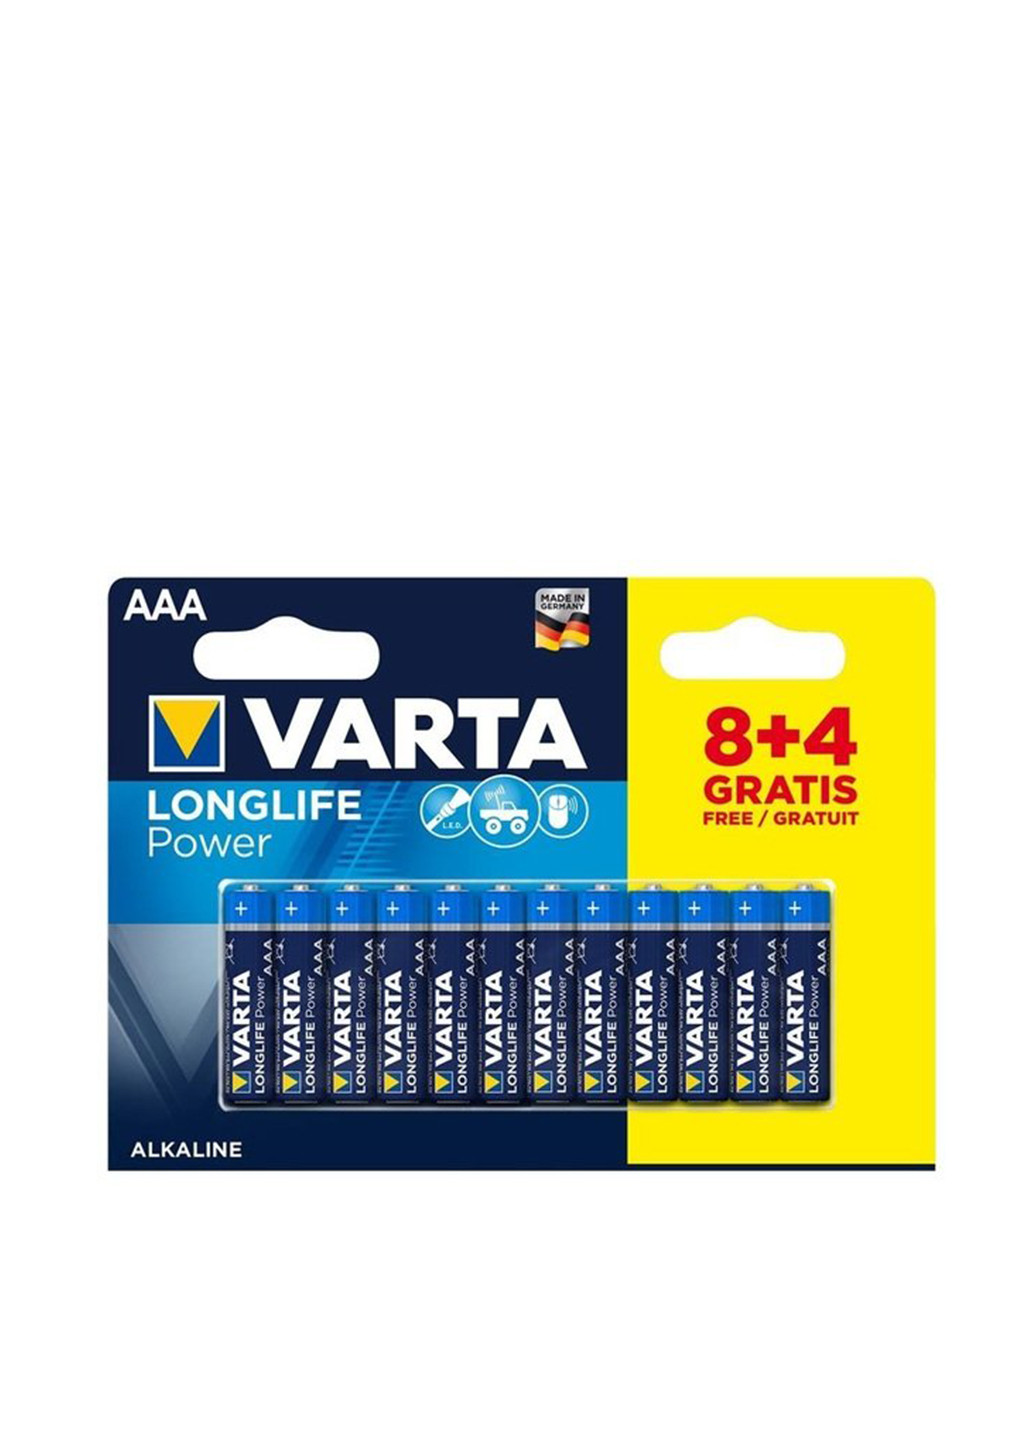 Батарейка Varta LONGLIFE POWER AAA BLI 12 (8+4) ALKALINE (04903121472) синие